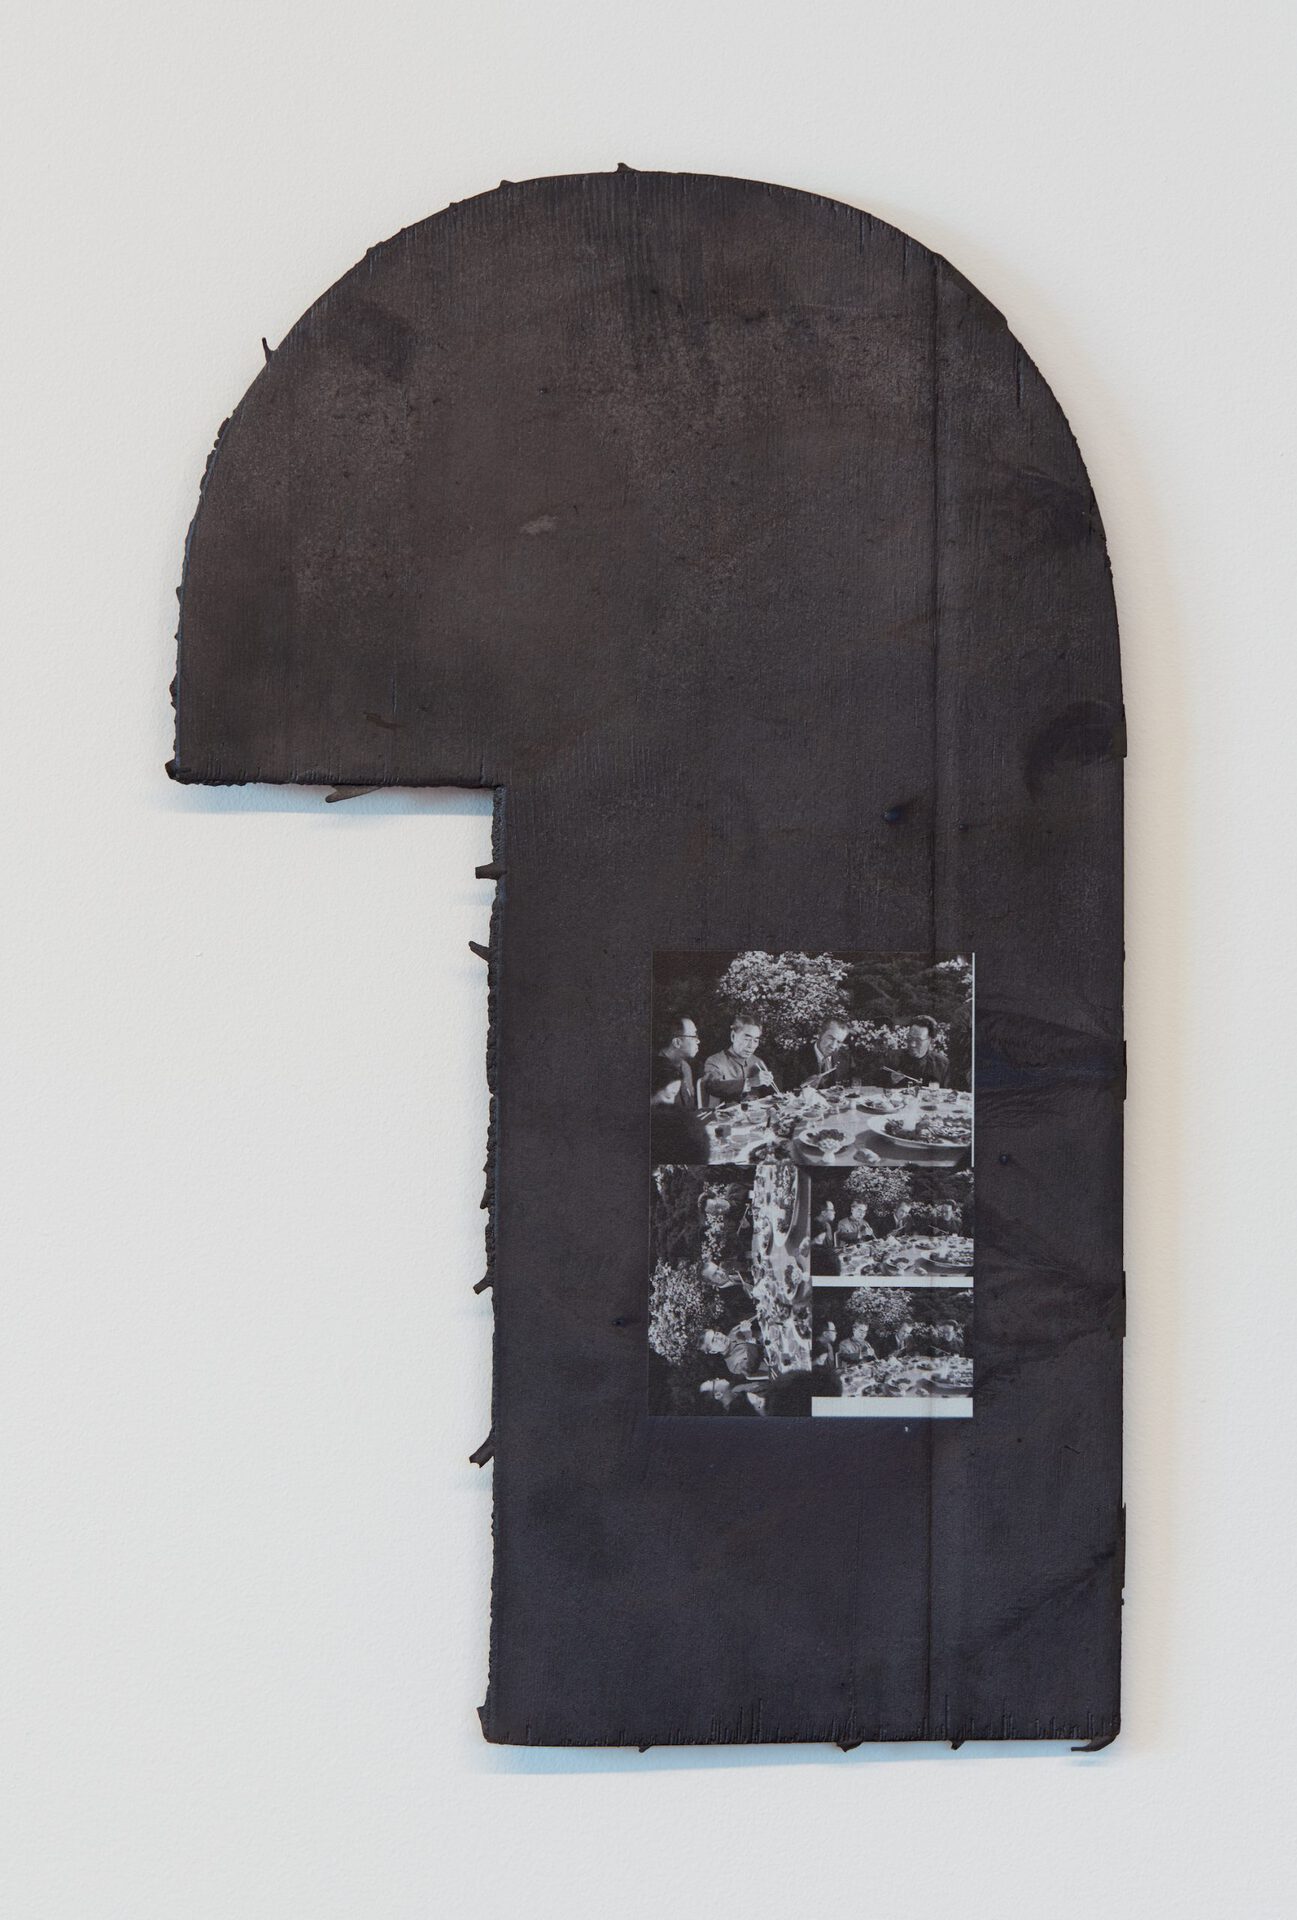 Martyn Reynolds, Black Hammer Nixon Banquet Testsheet, 2020, anodized cast aluminum, uv print, 48 x 30 cm